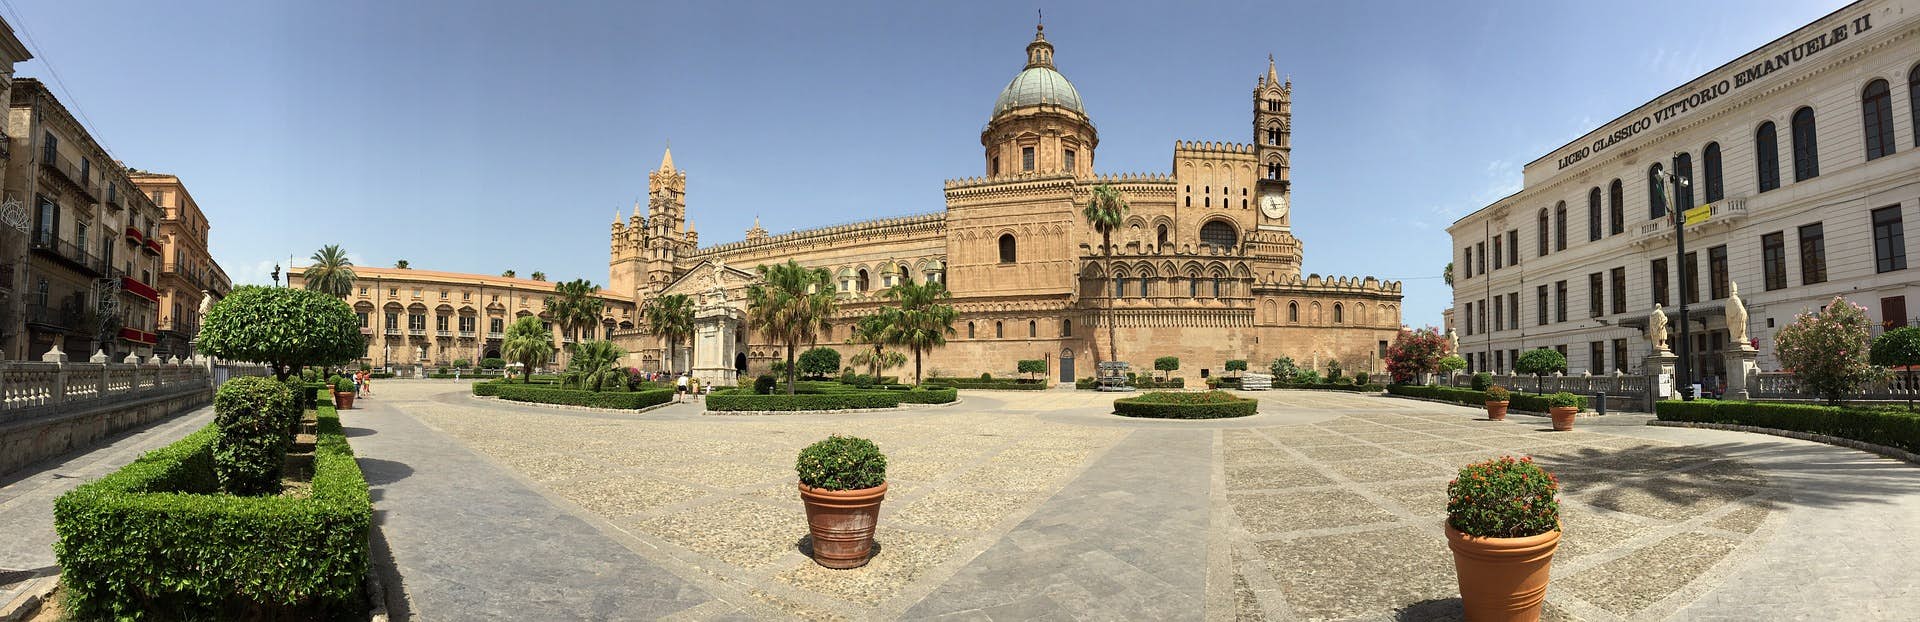 Palermo image